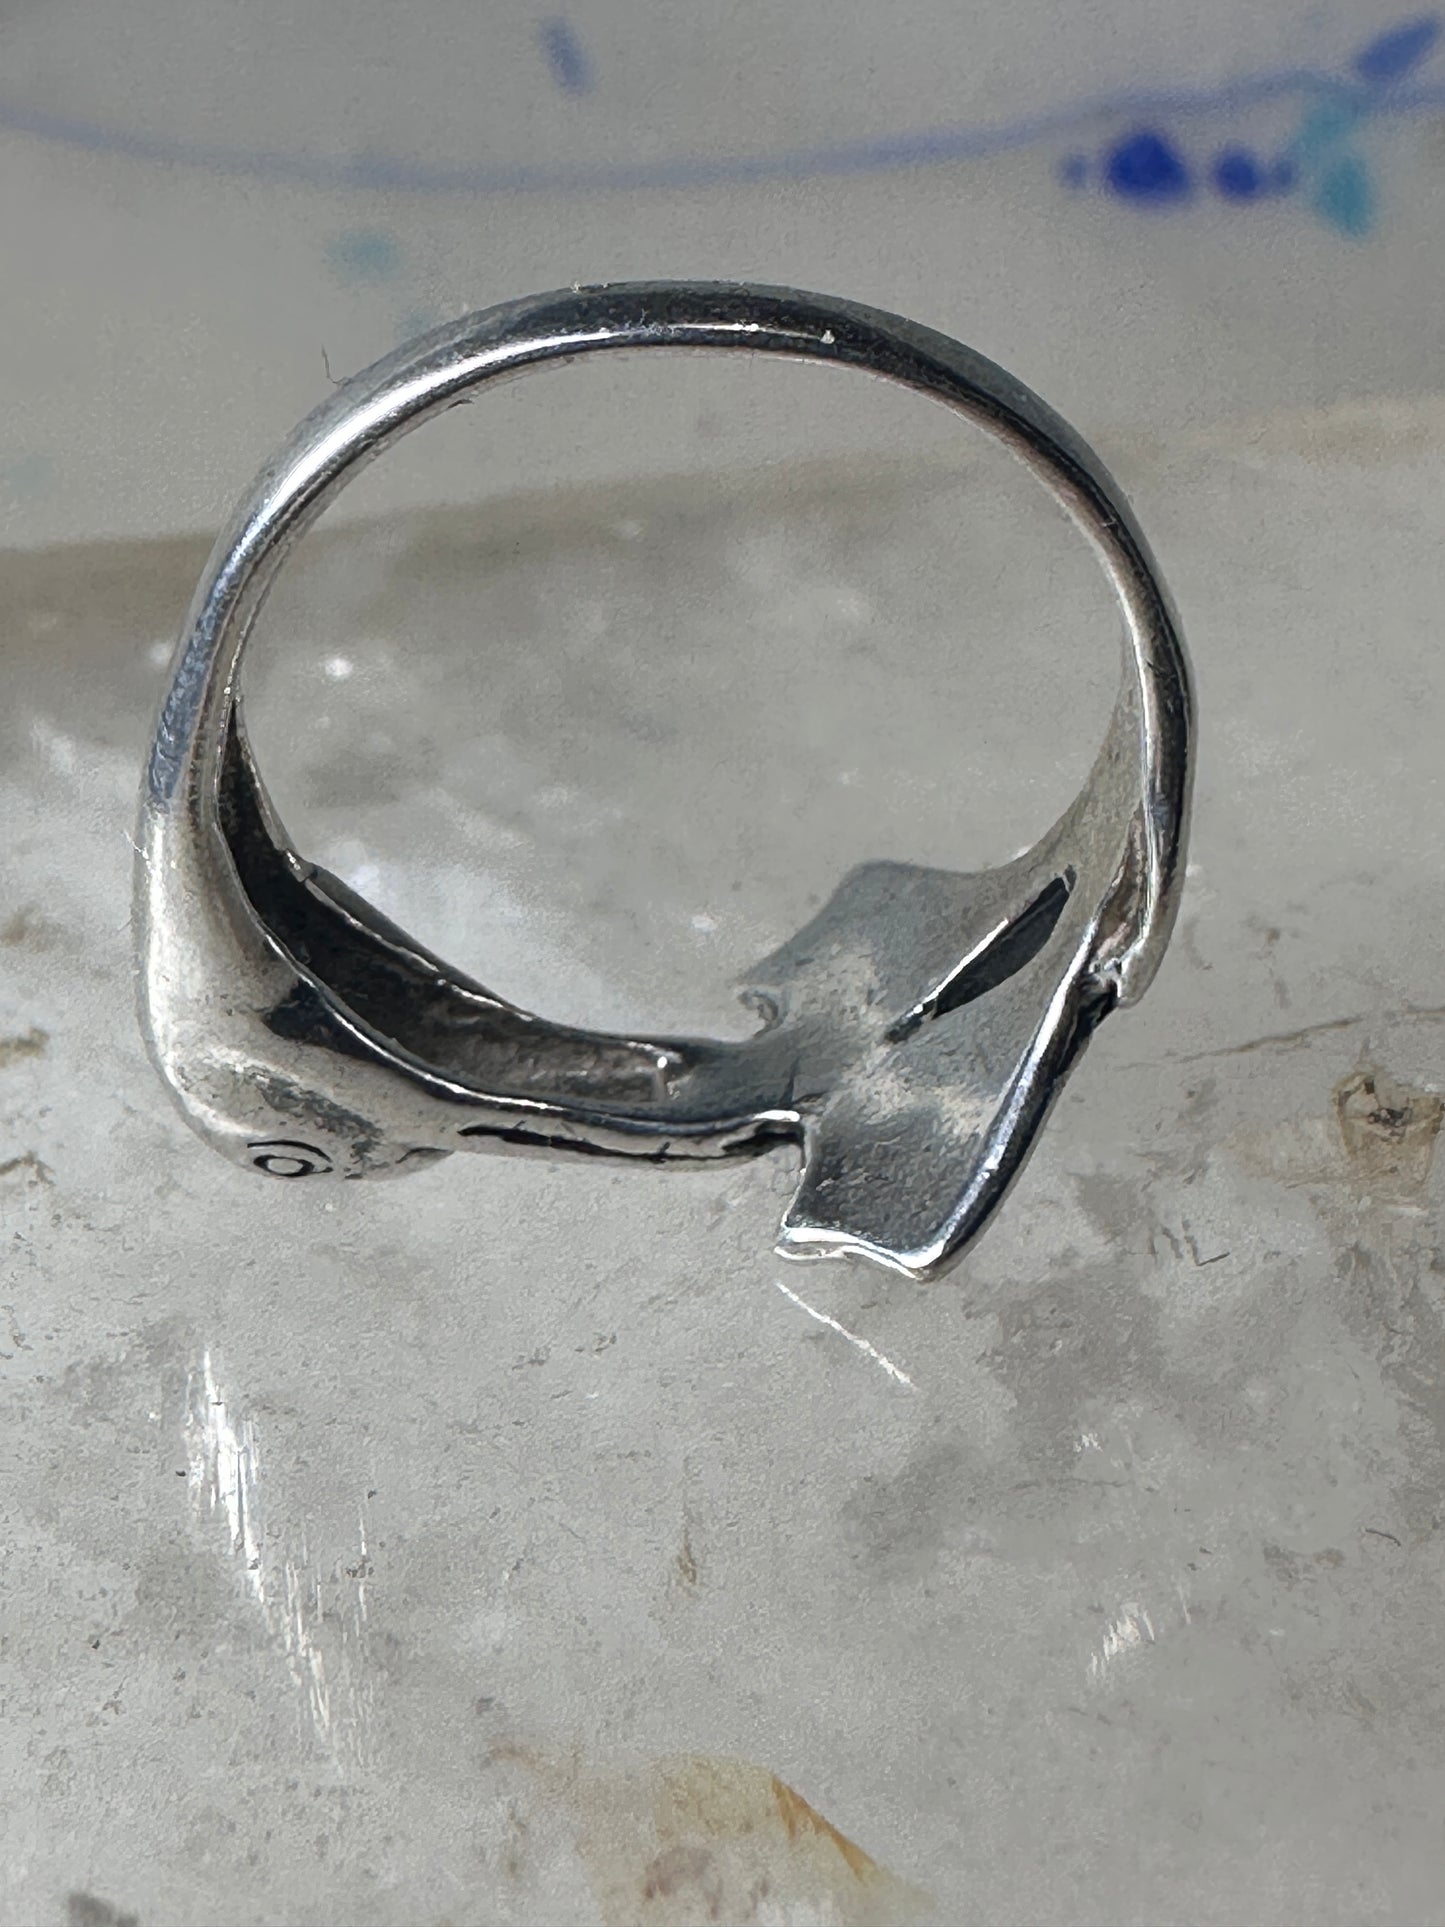 Duck ring bird band size 4.75 sterling silver girls women